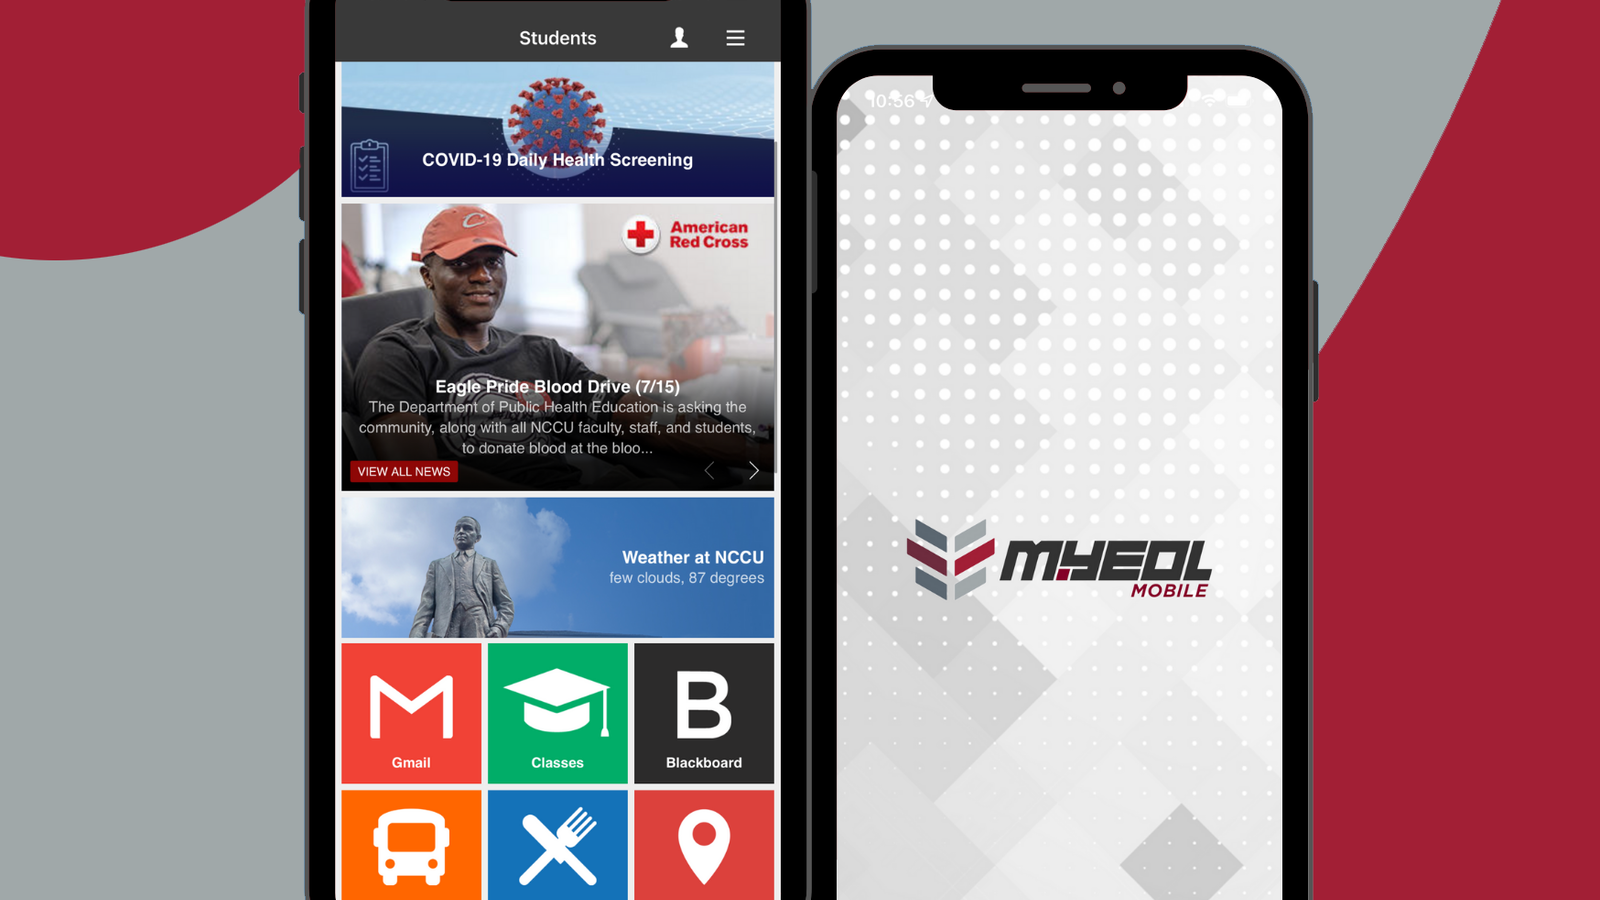 Screenshots of myEOL mobile app on iPhone 